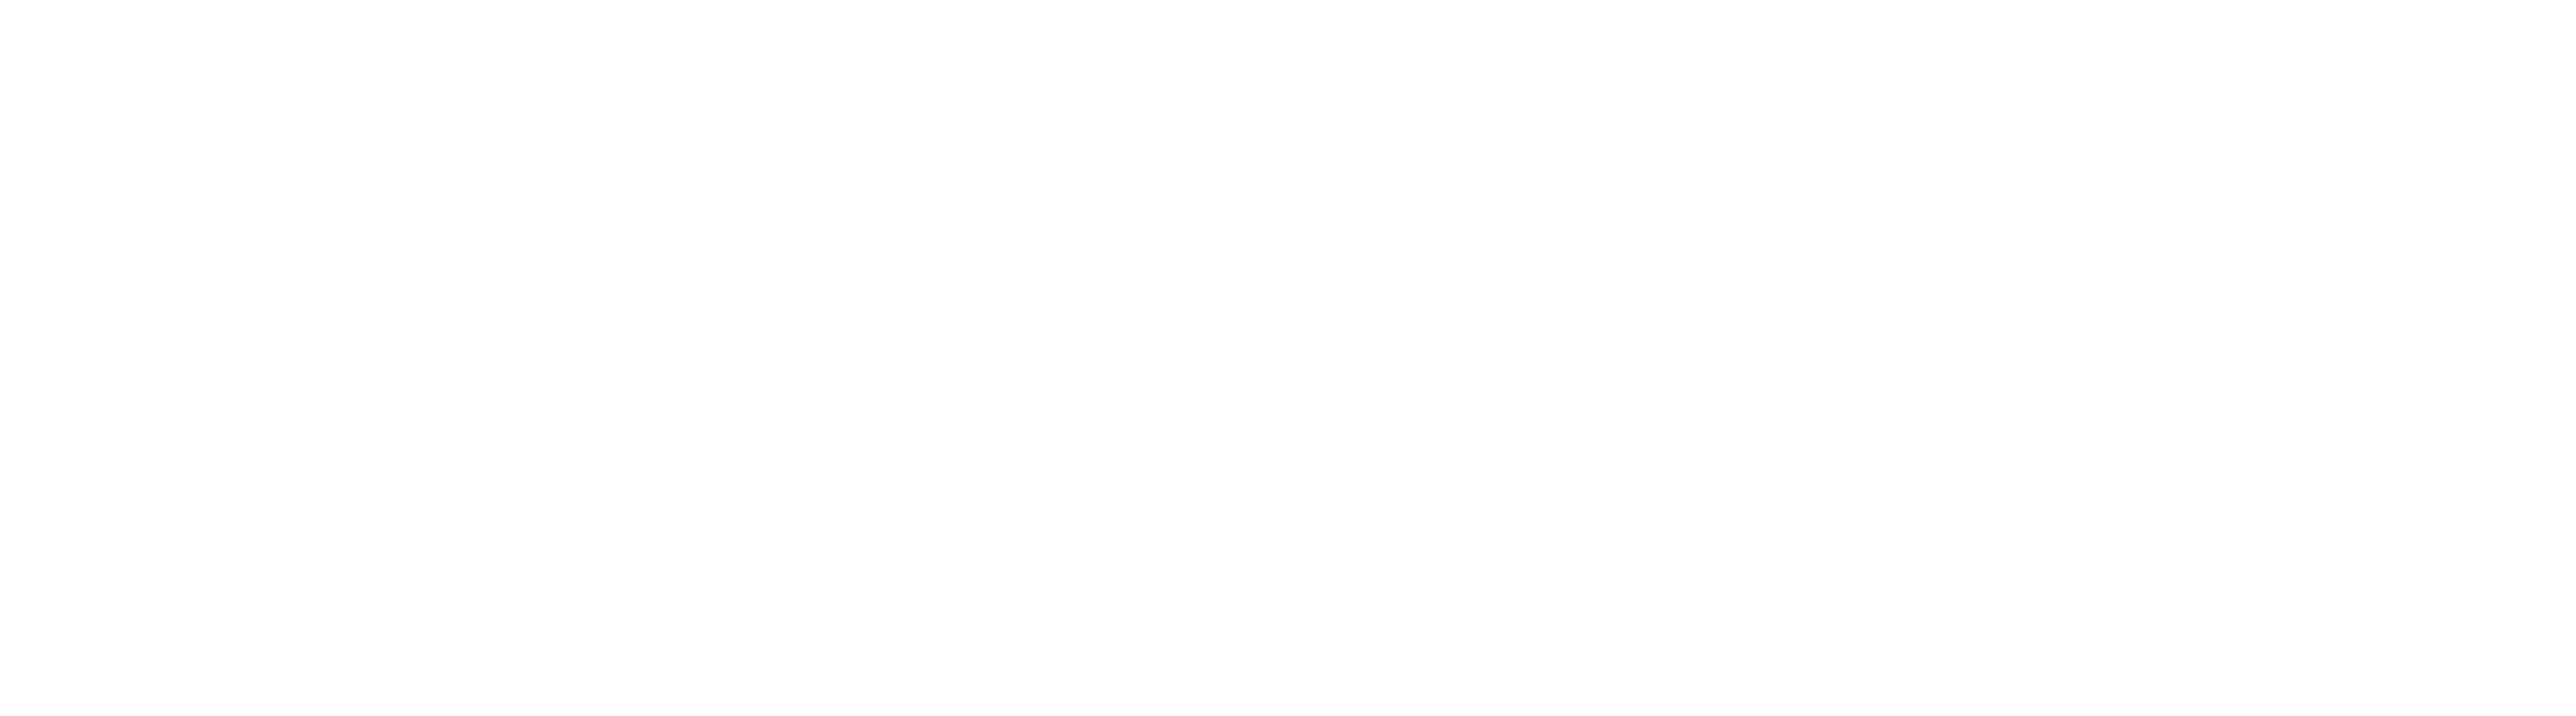 Yahoo Entertainment logo